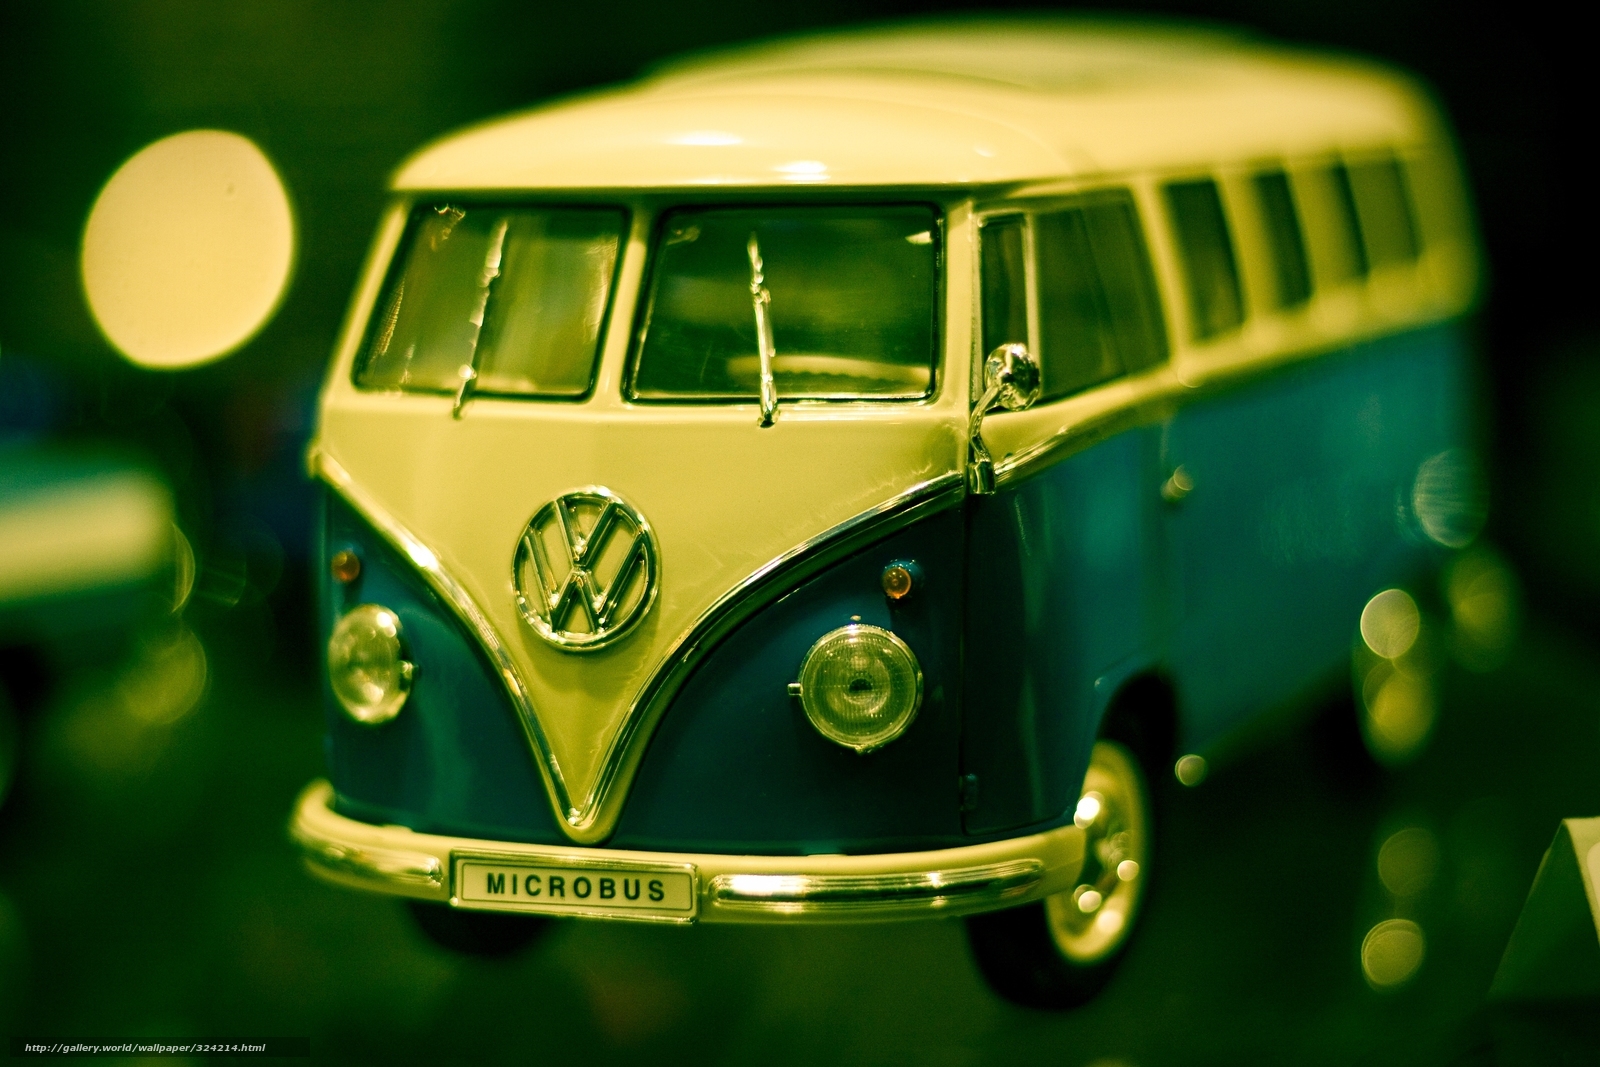 Download wallpaper Machine toy minibus photo free